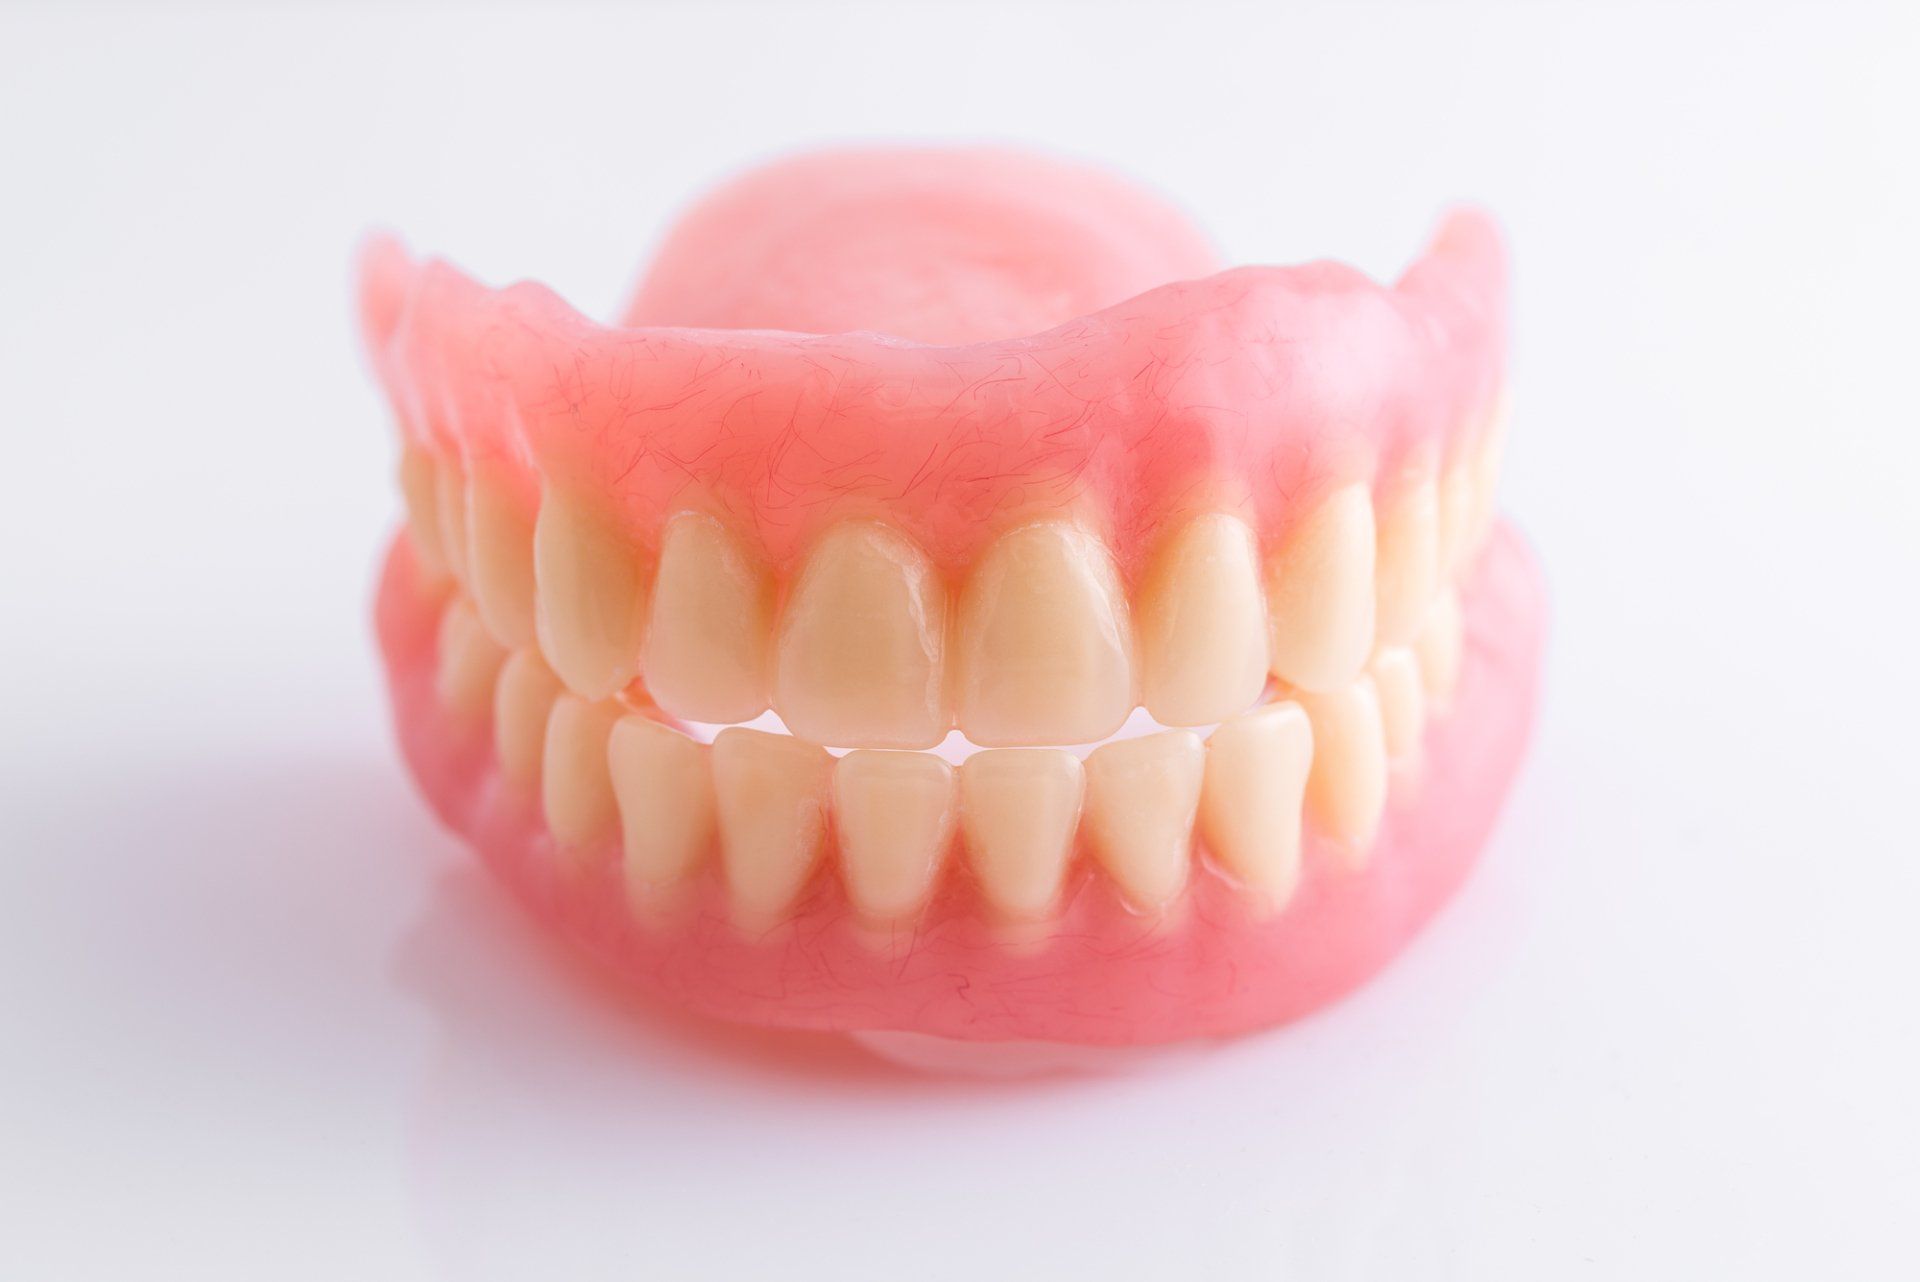 Custom anatomized full set of dentures that look super realistic